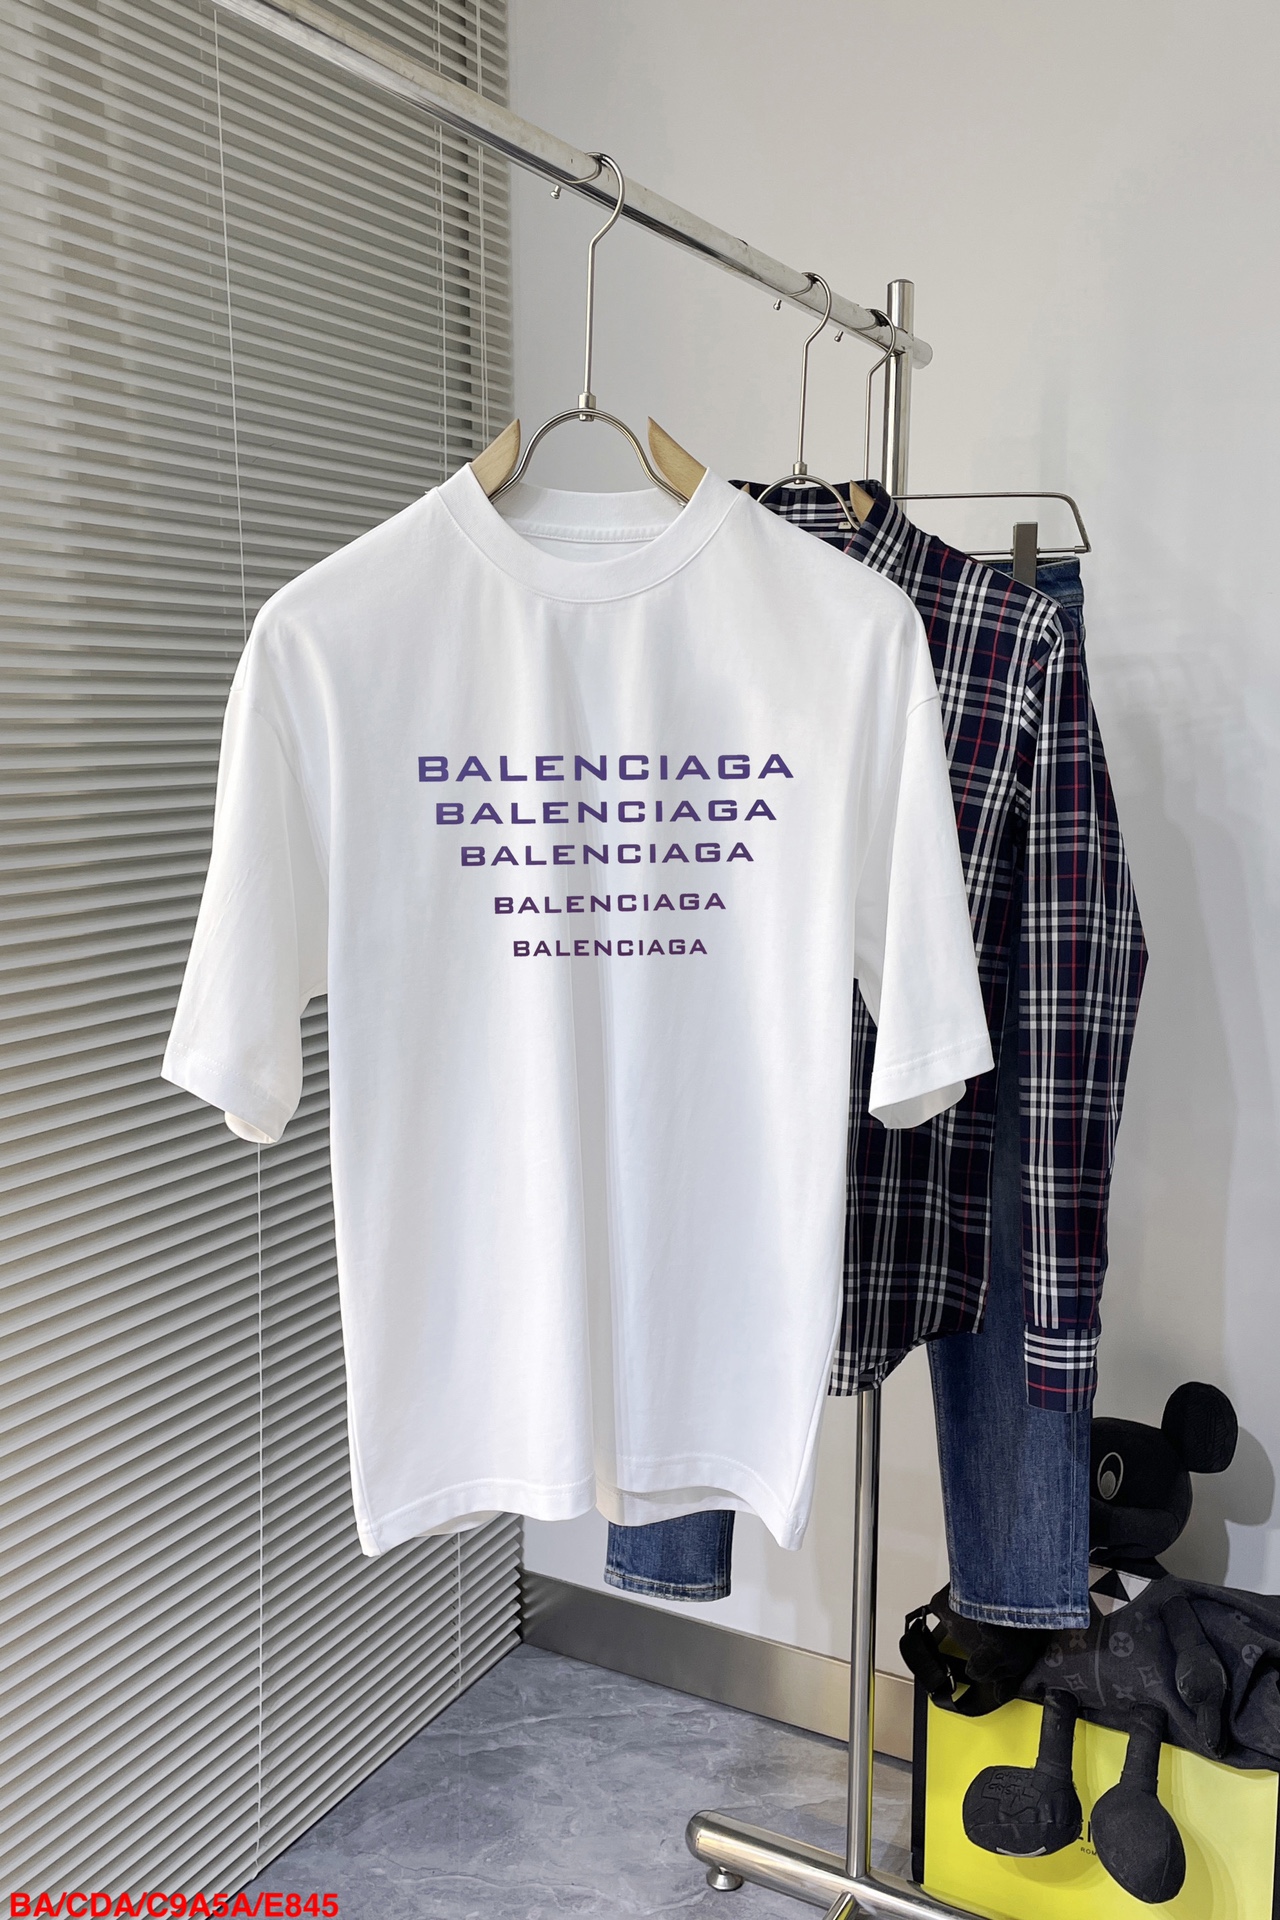 Balenciaga AAAAA
 Clothing T-Shirt Black White Printing Cotton Short Sleeve